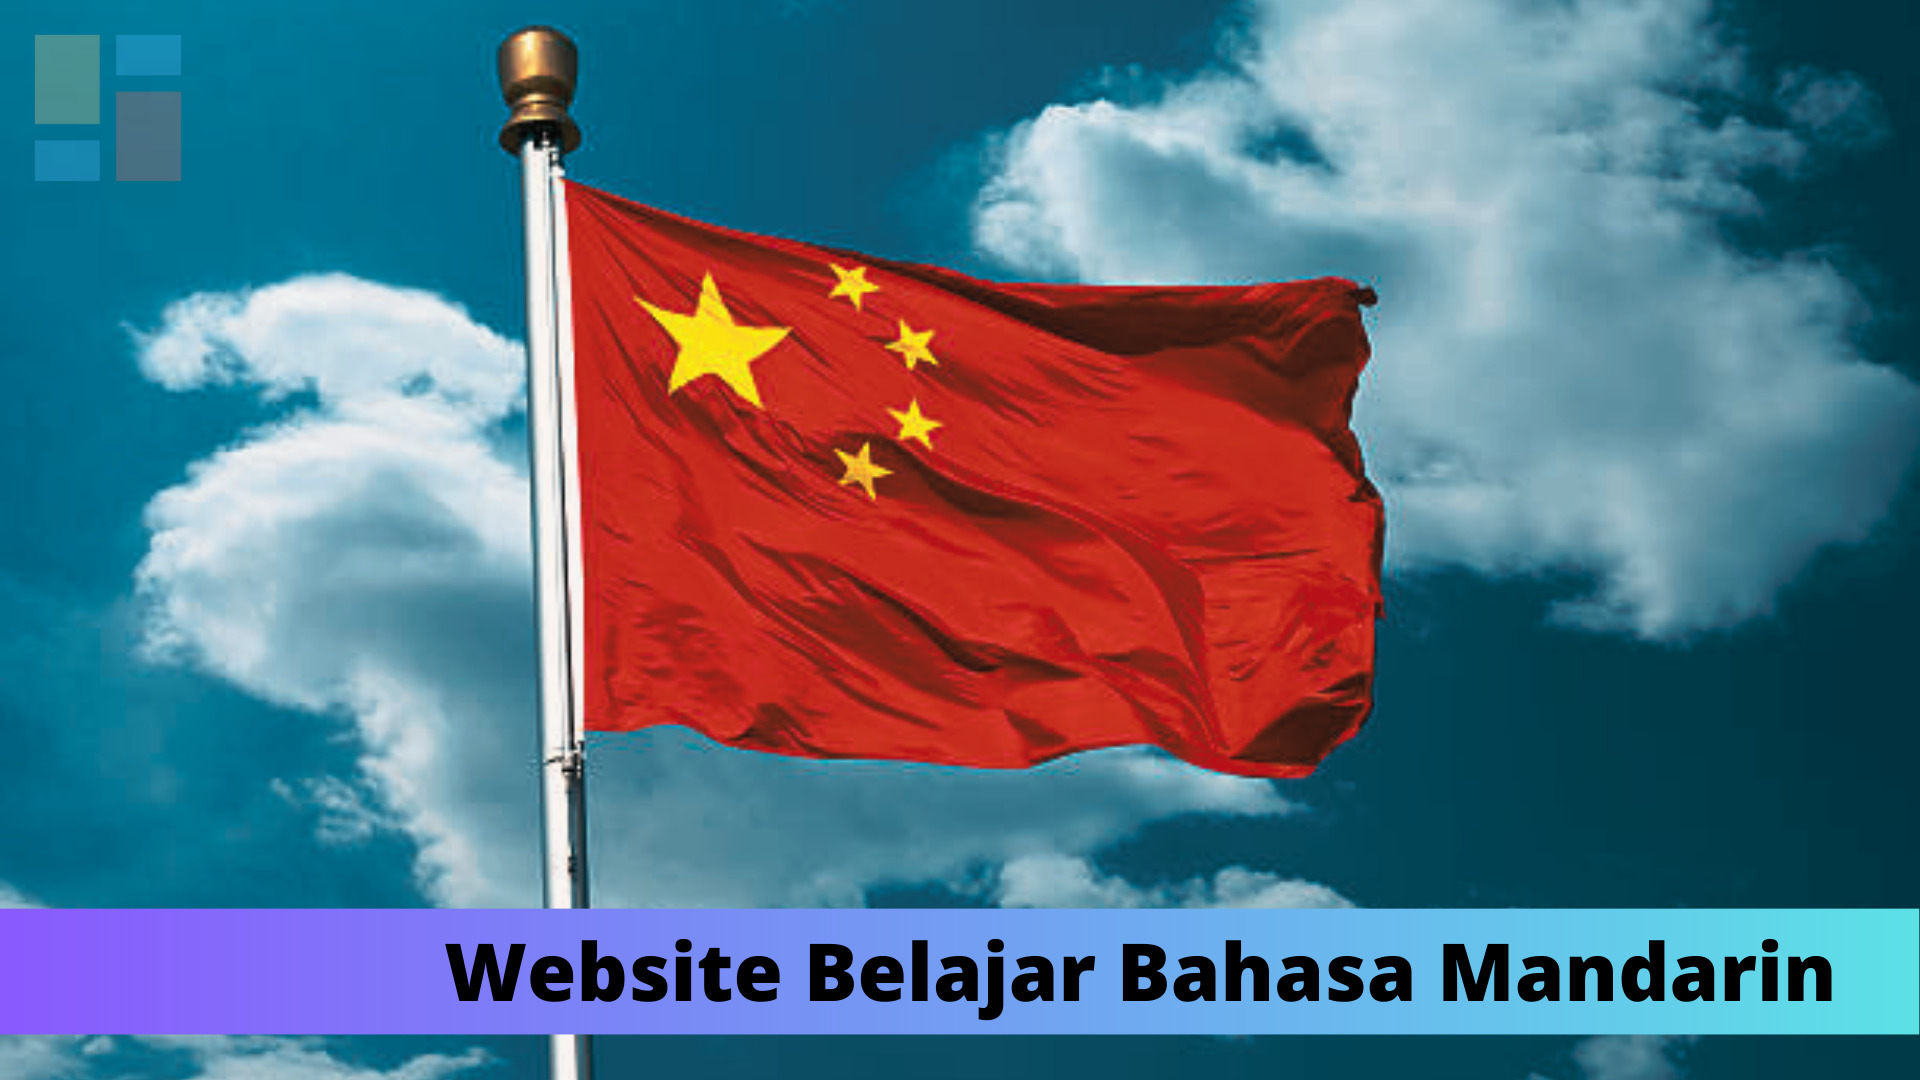 Website Belajar Bahasa Mandarin